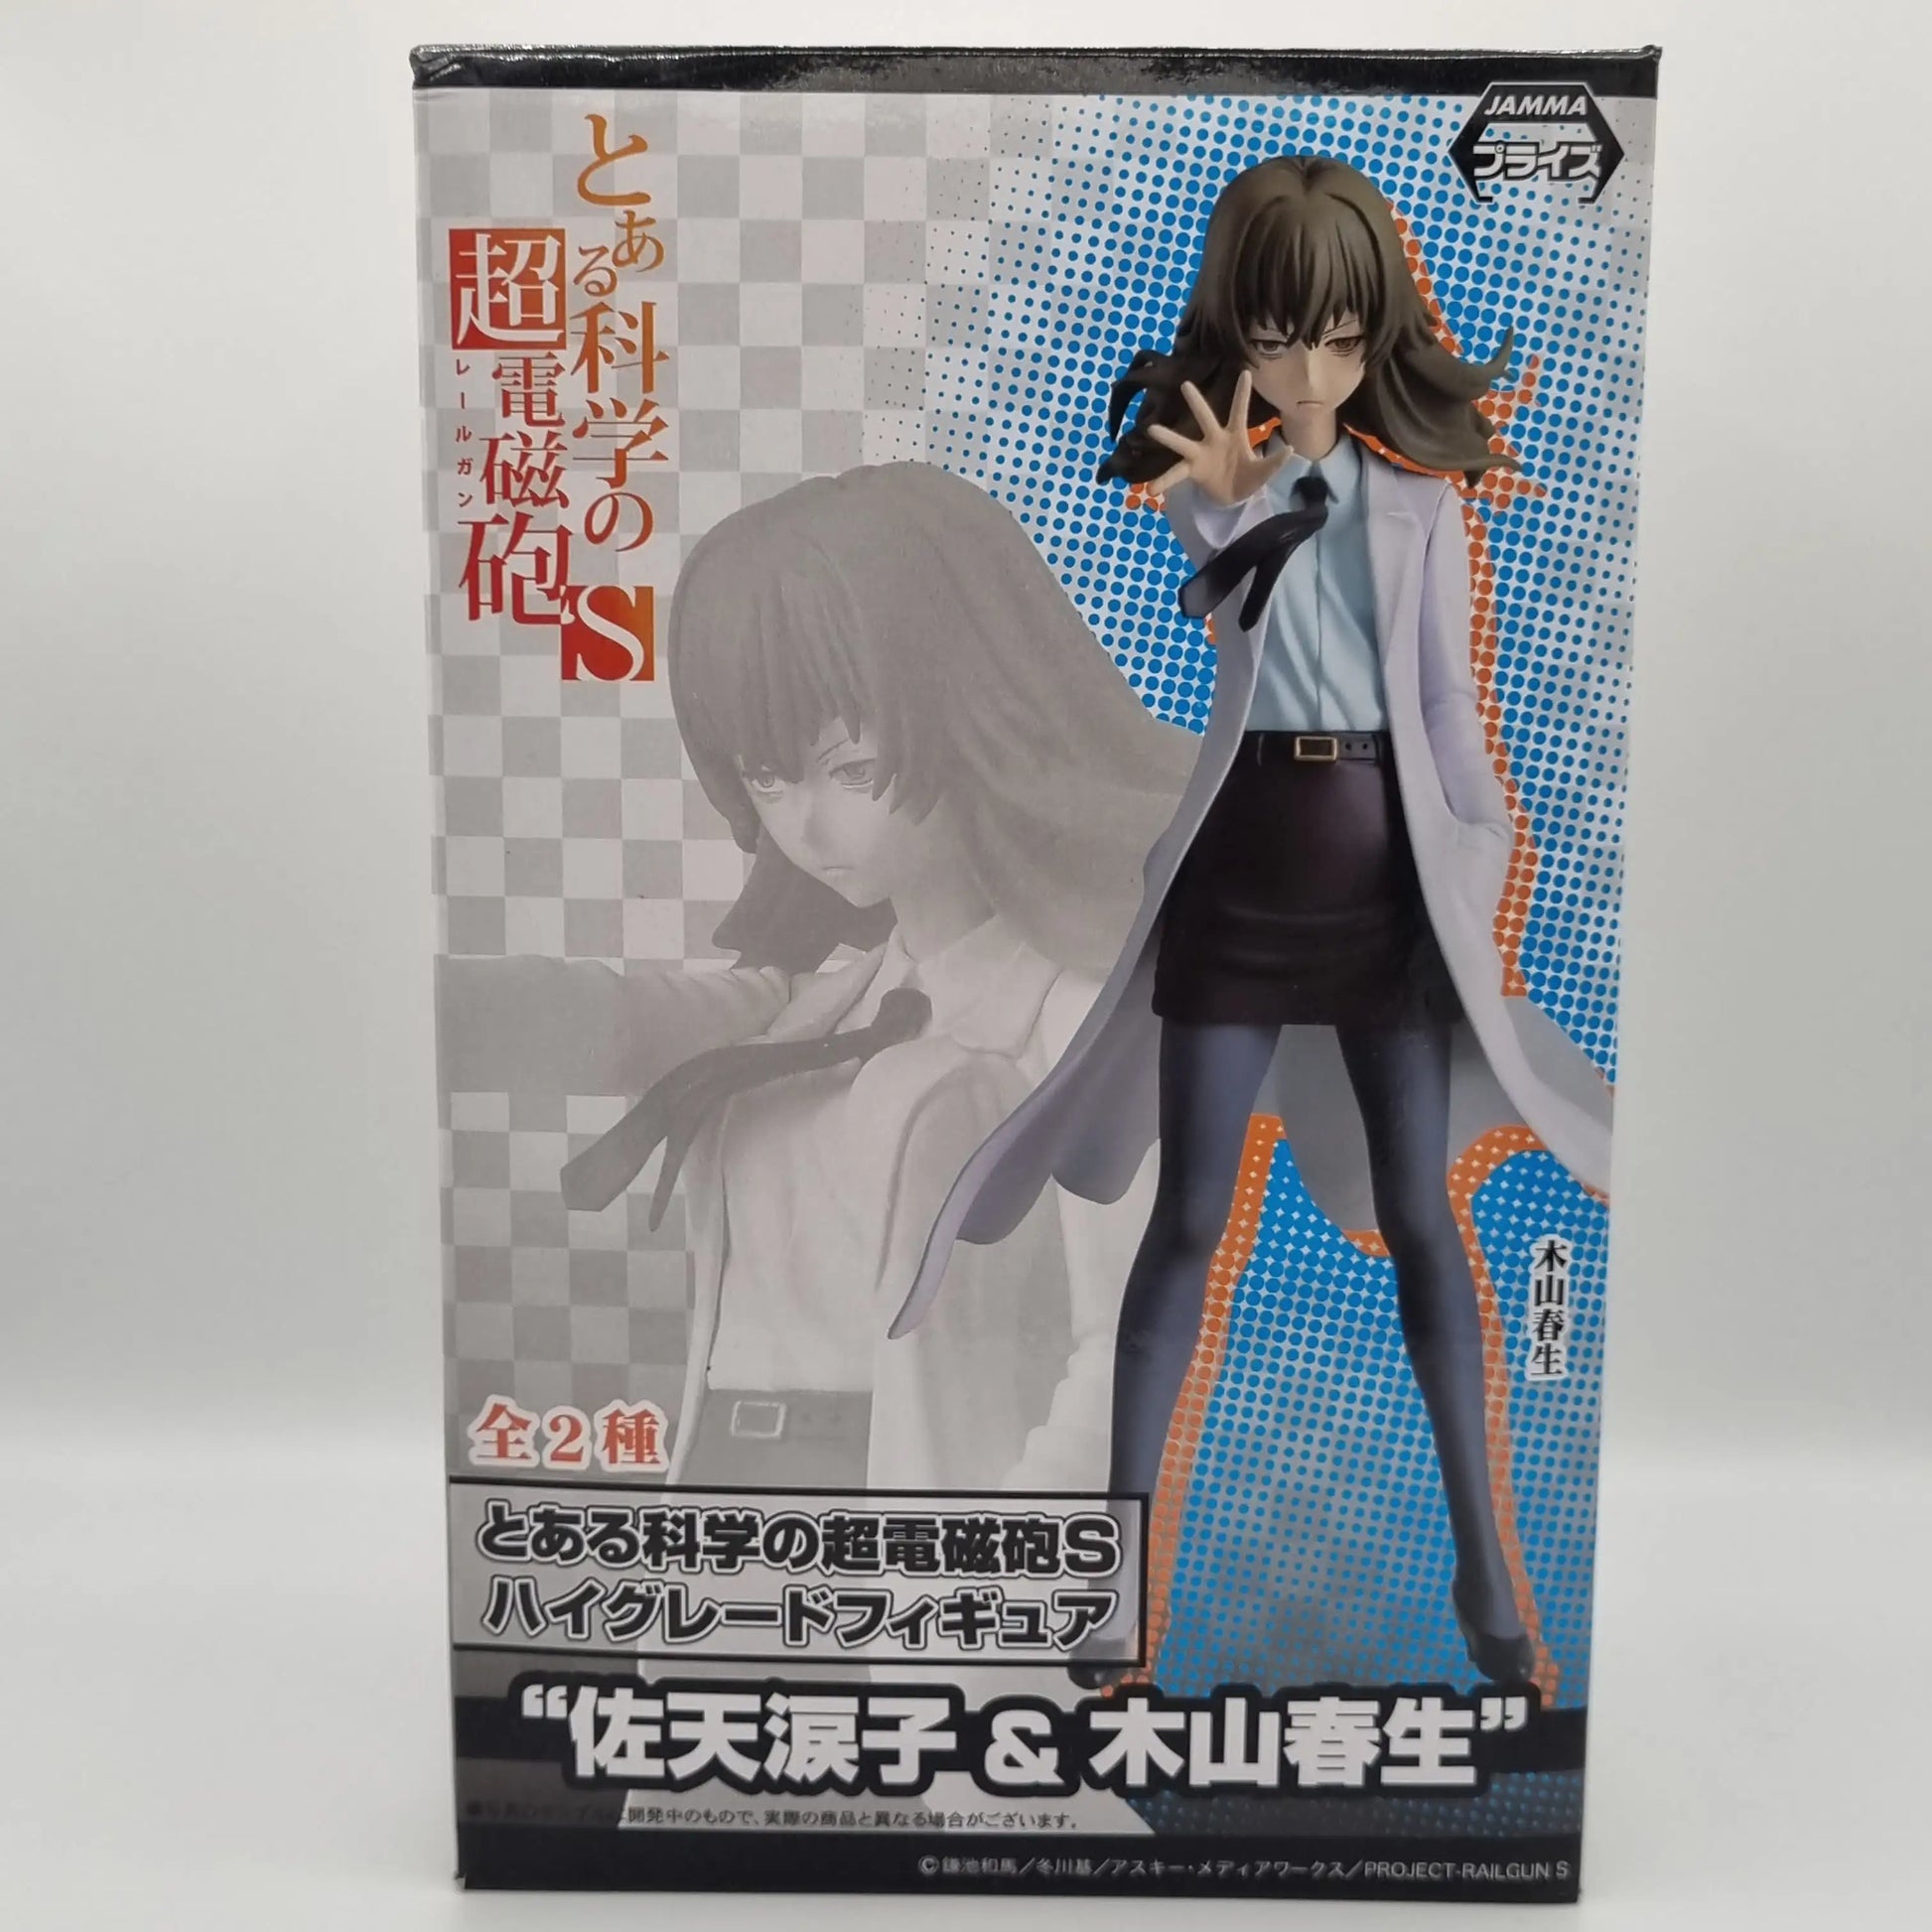 Anime Store, A Certain Scientific Railgun Harumi Kiyama Figure, Front View Packaging